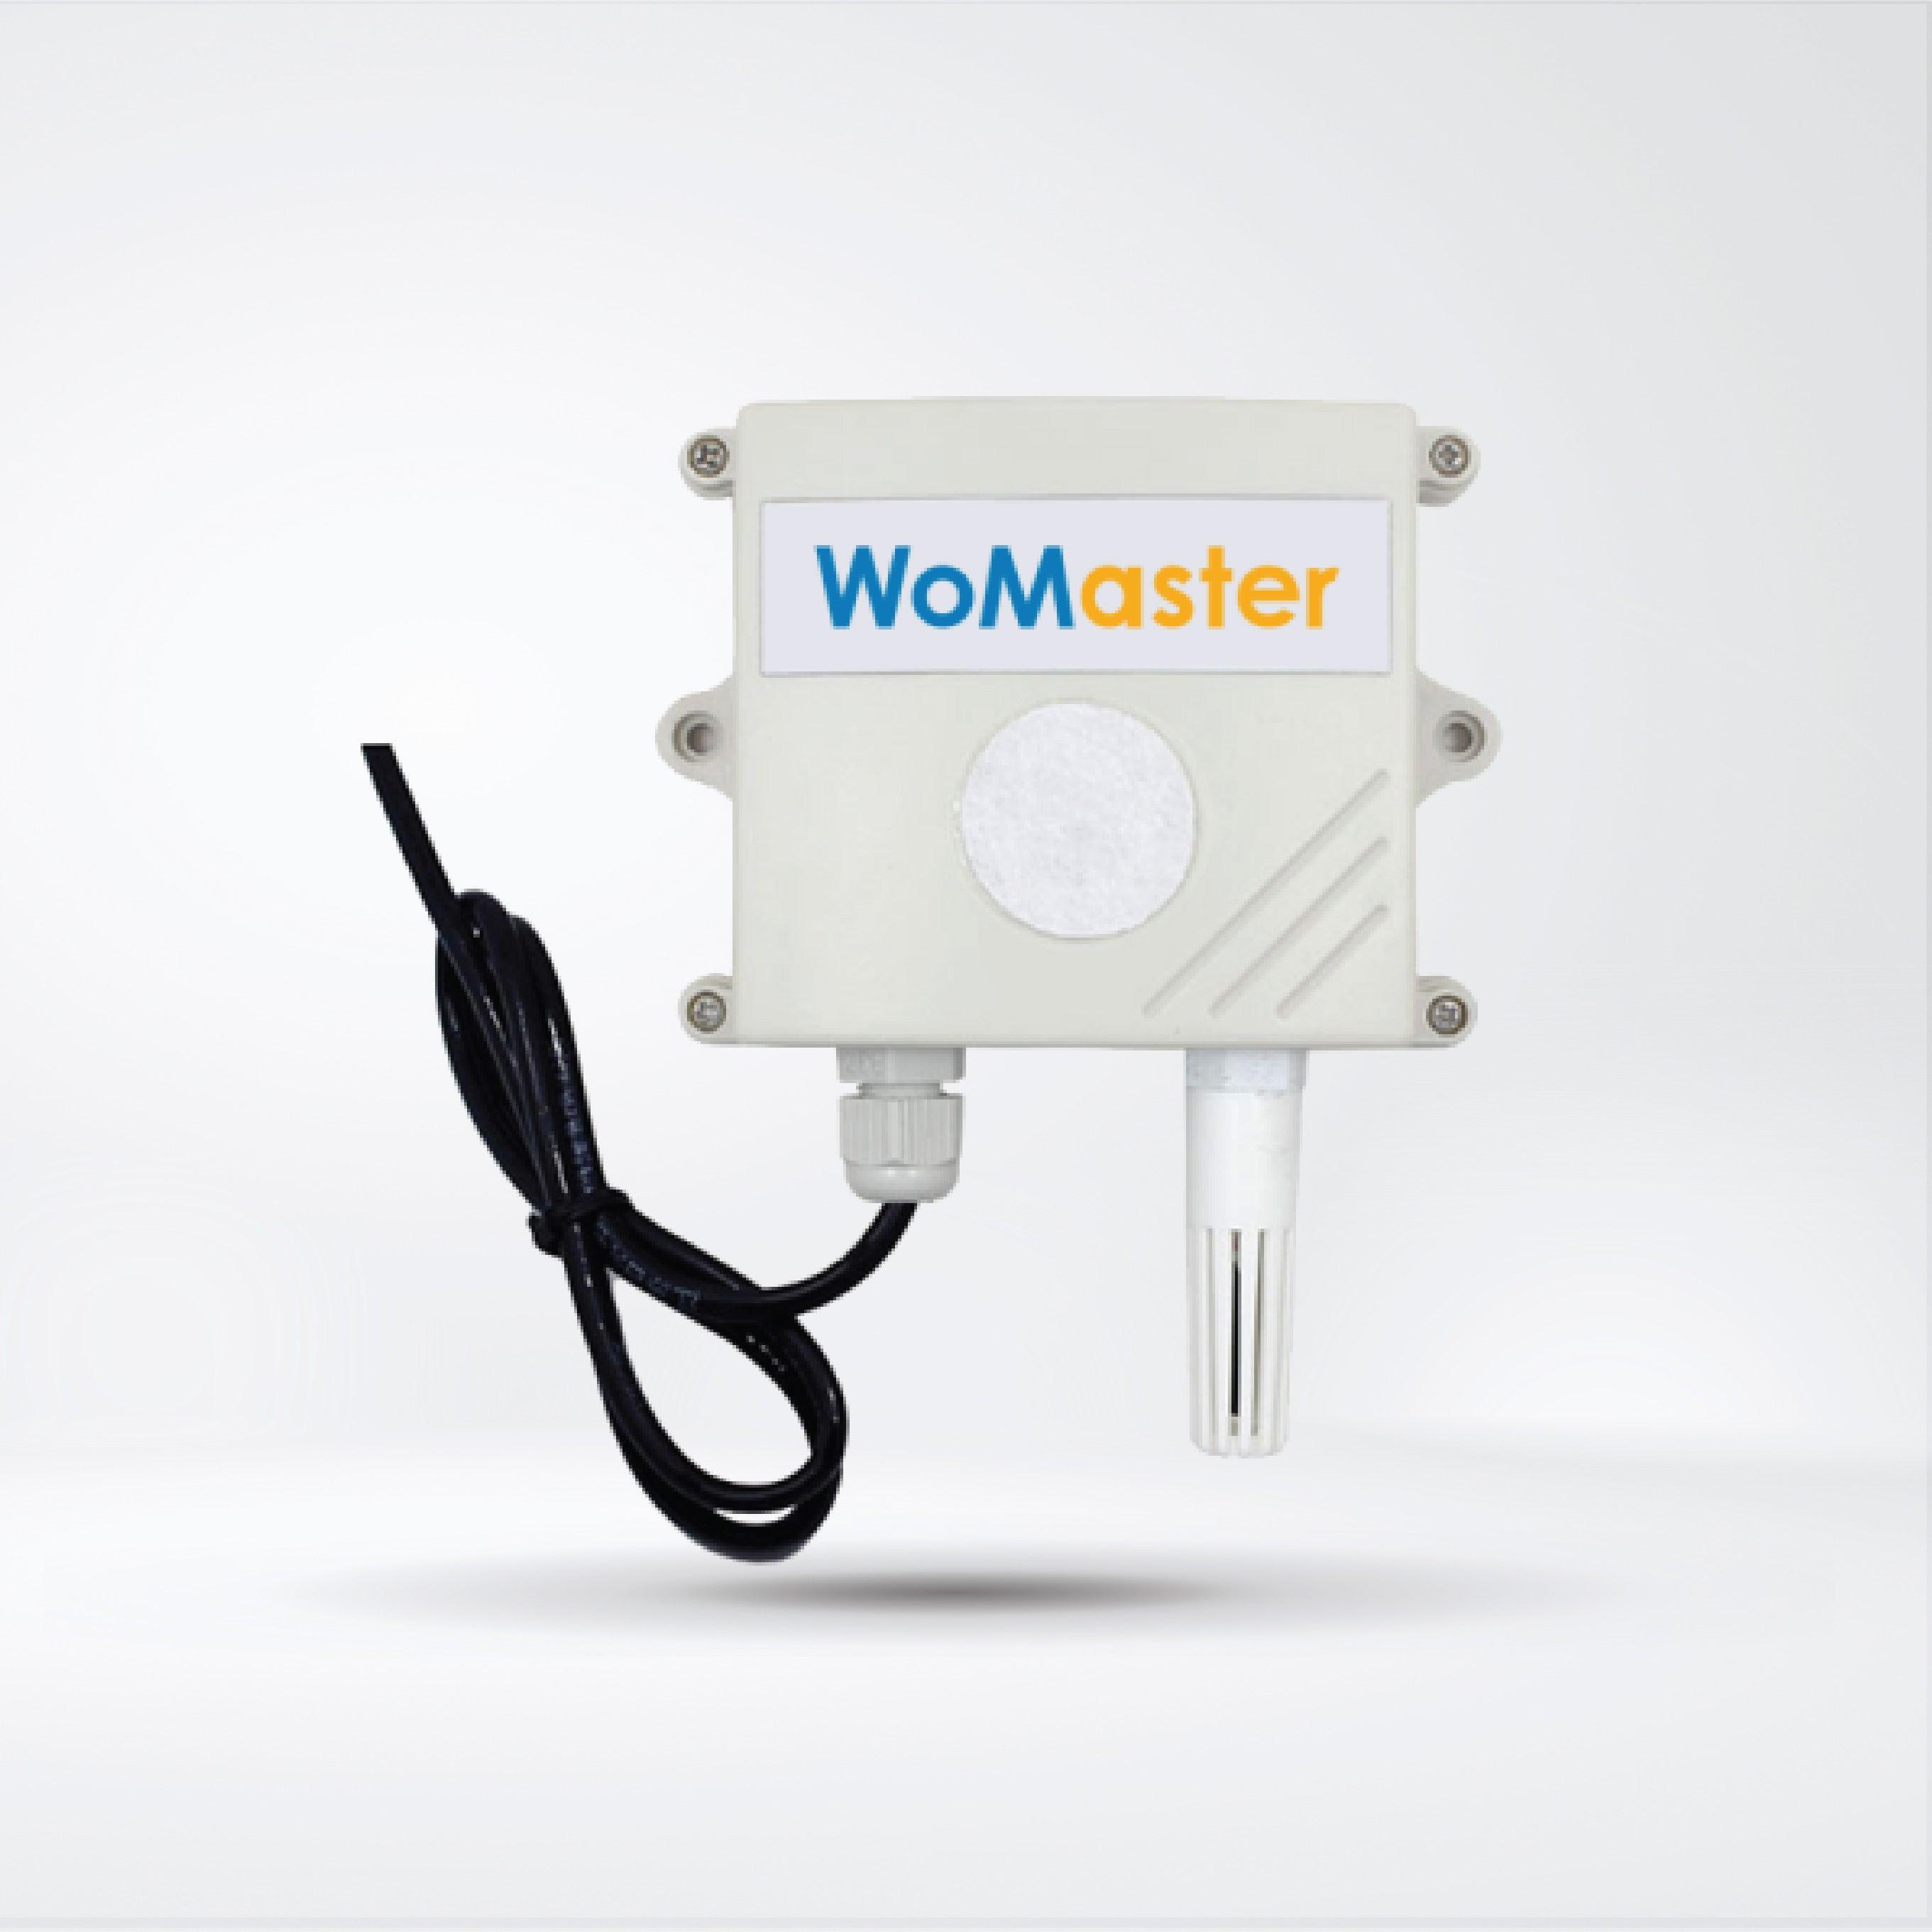 ES101O2 Outdoor Oxygen O2 Sensor | WoMaster - Riverplus